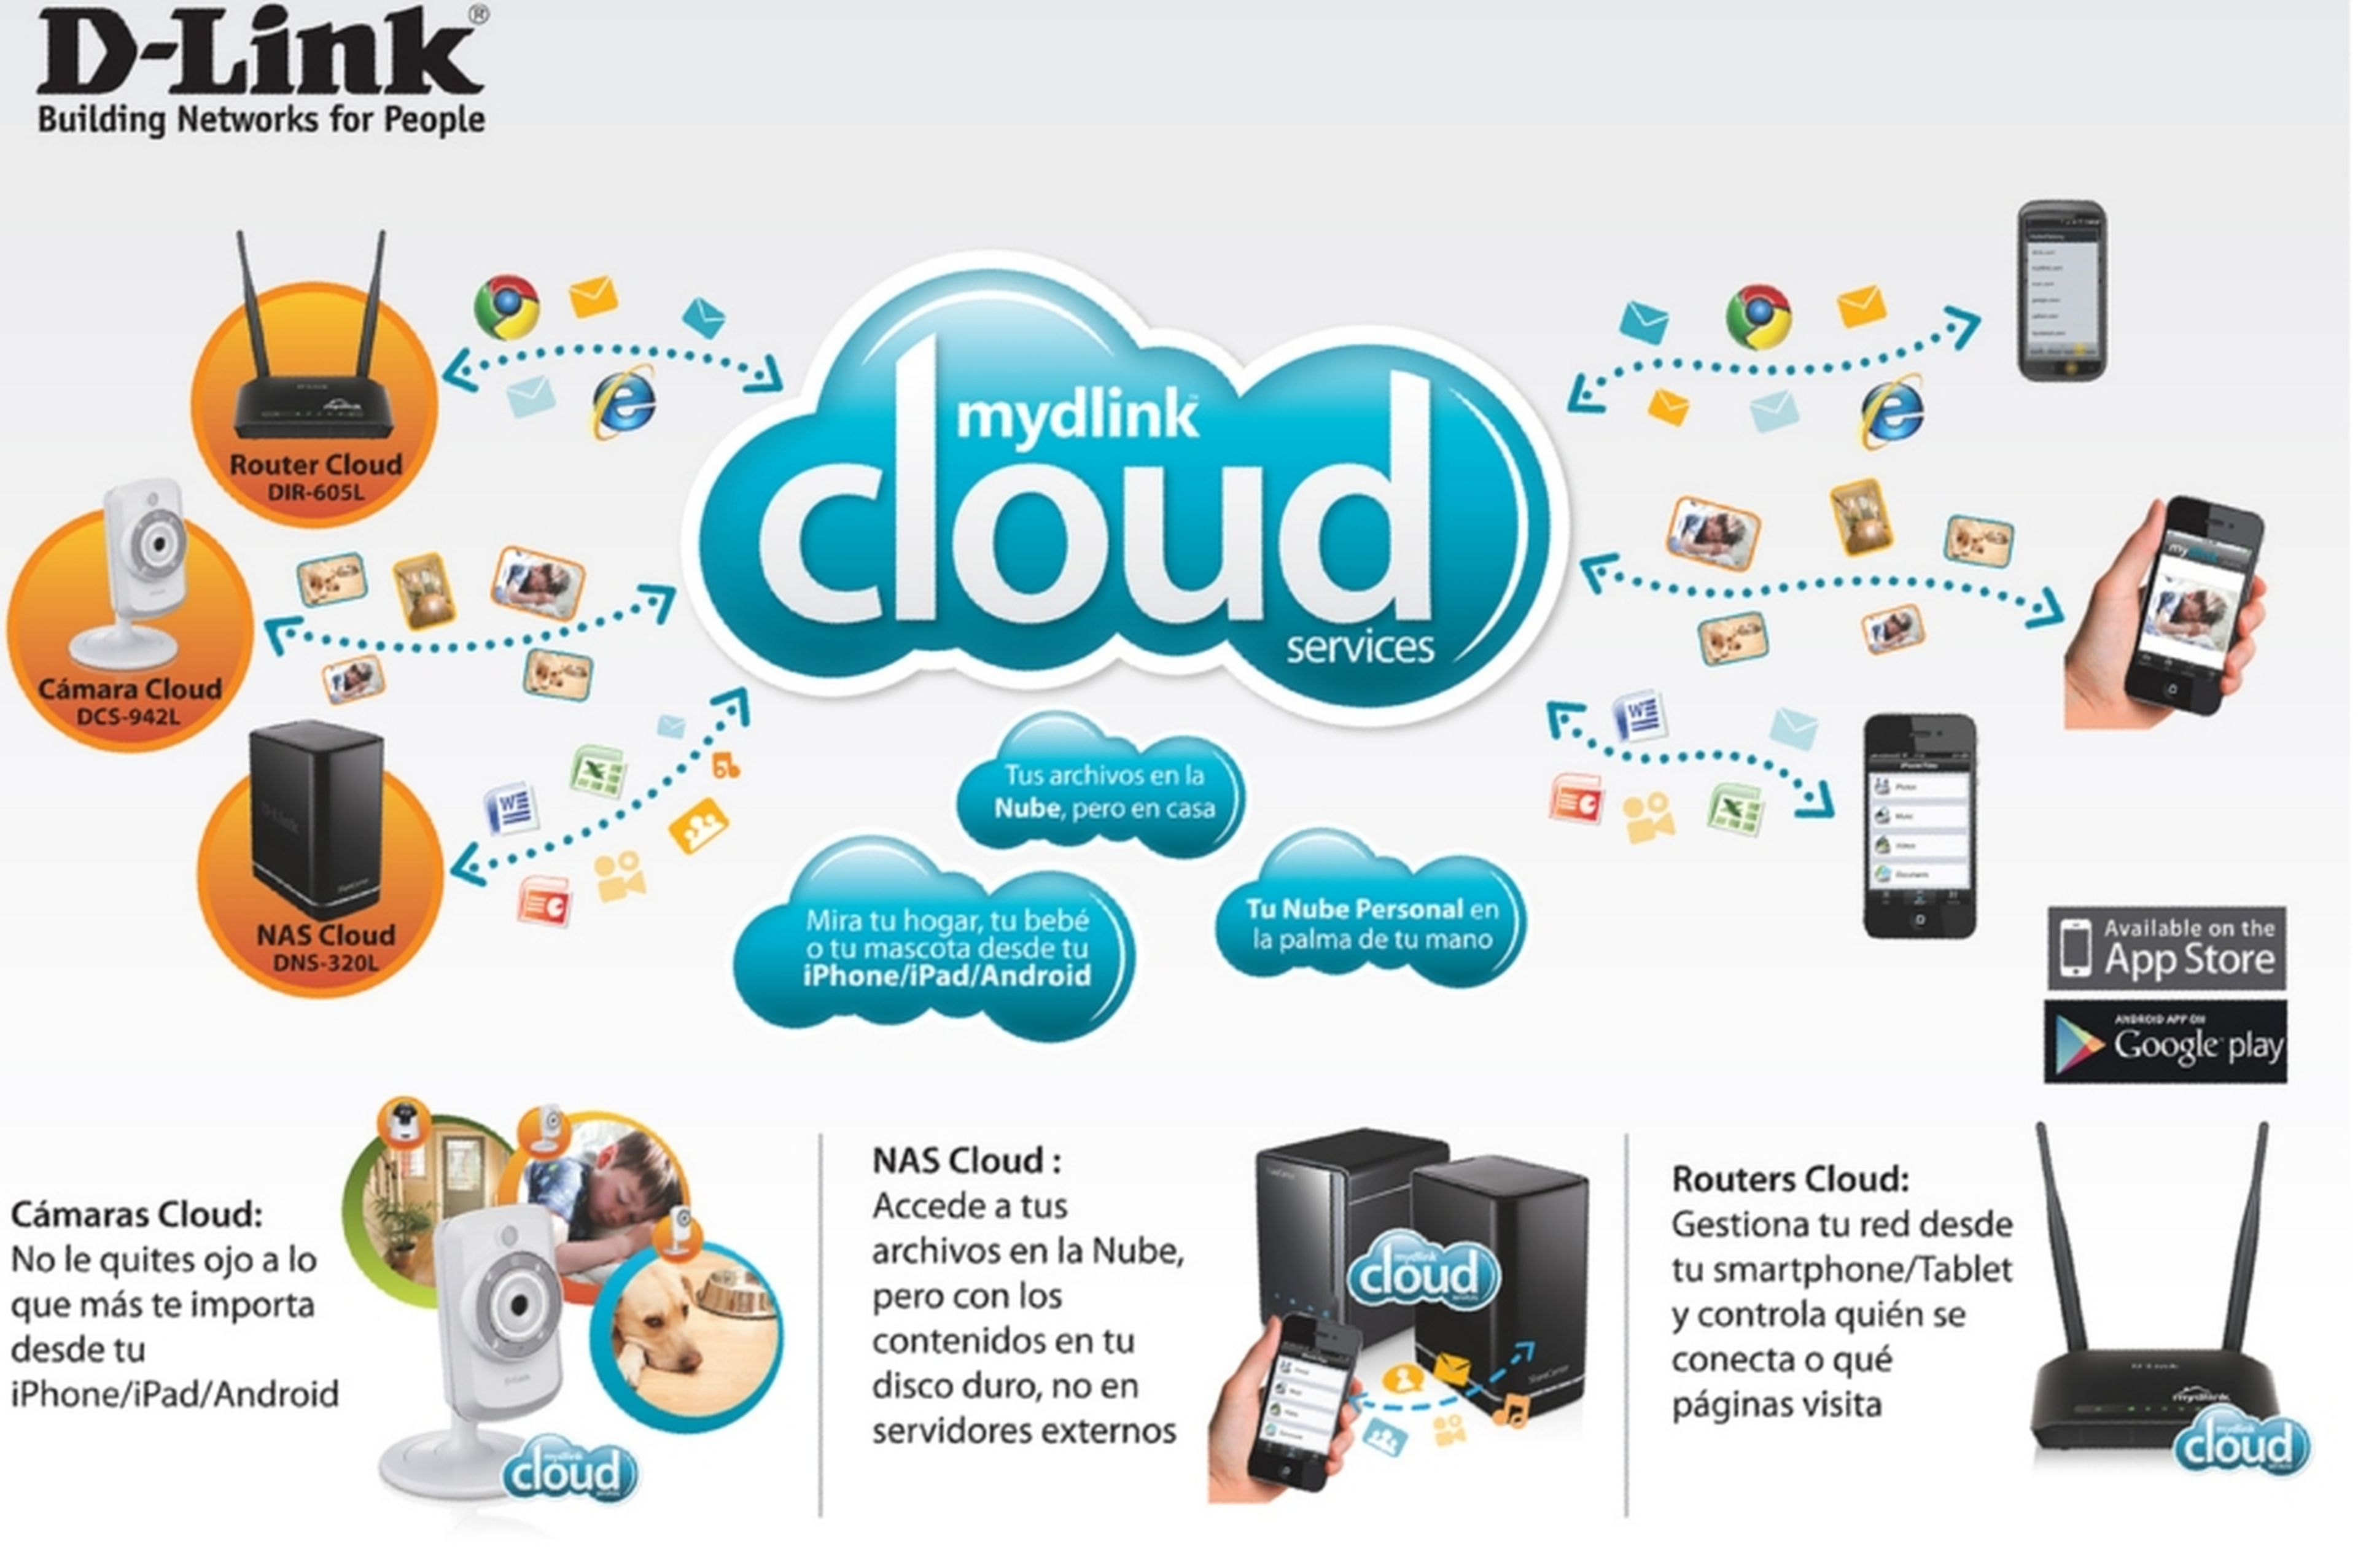 Mydlink Cloud Services